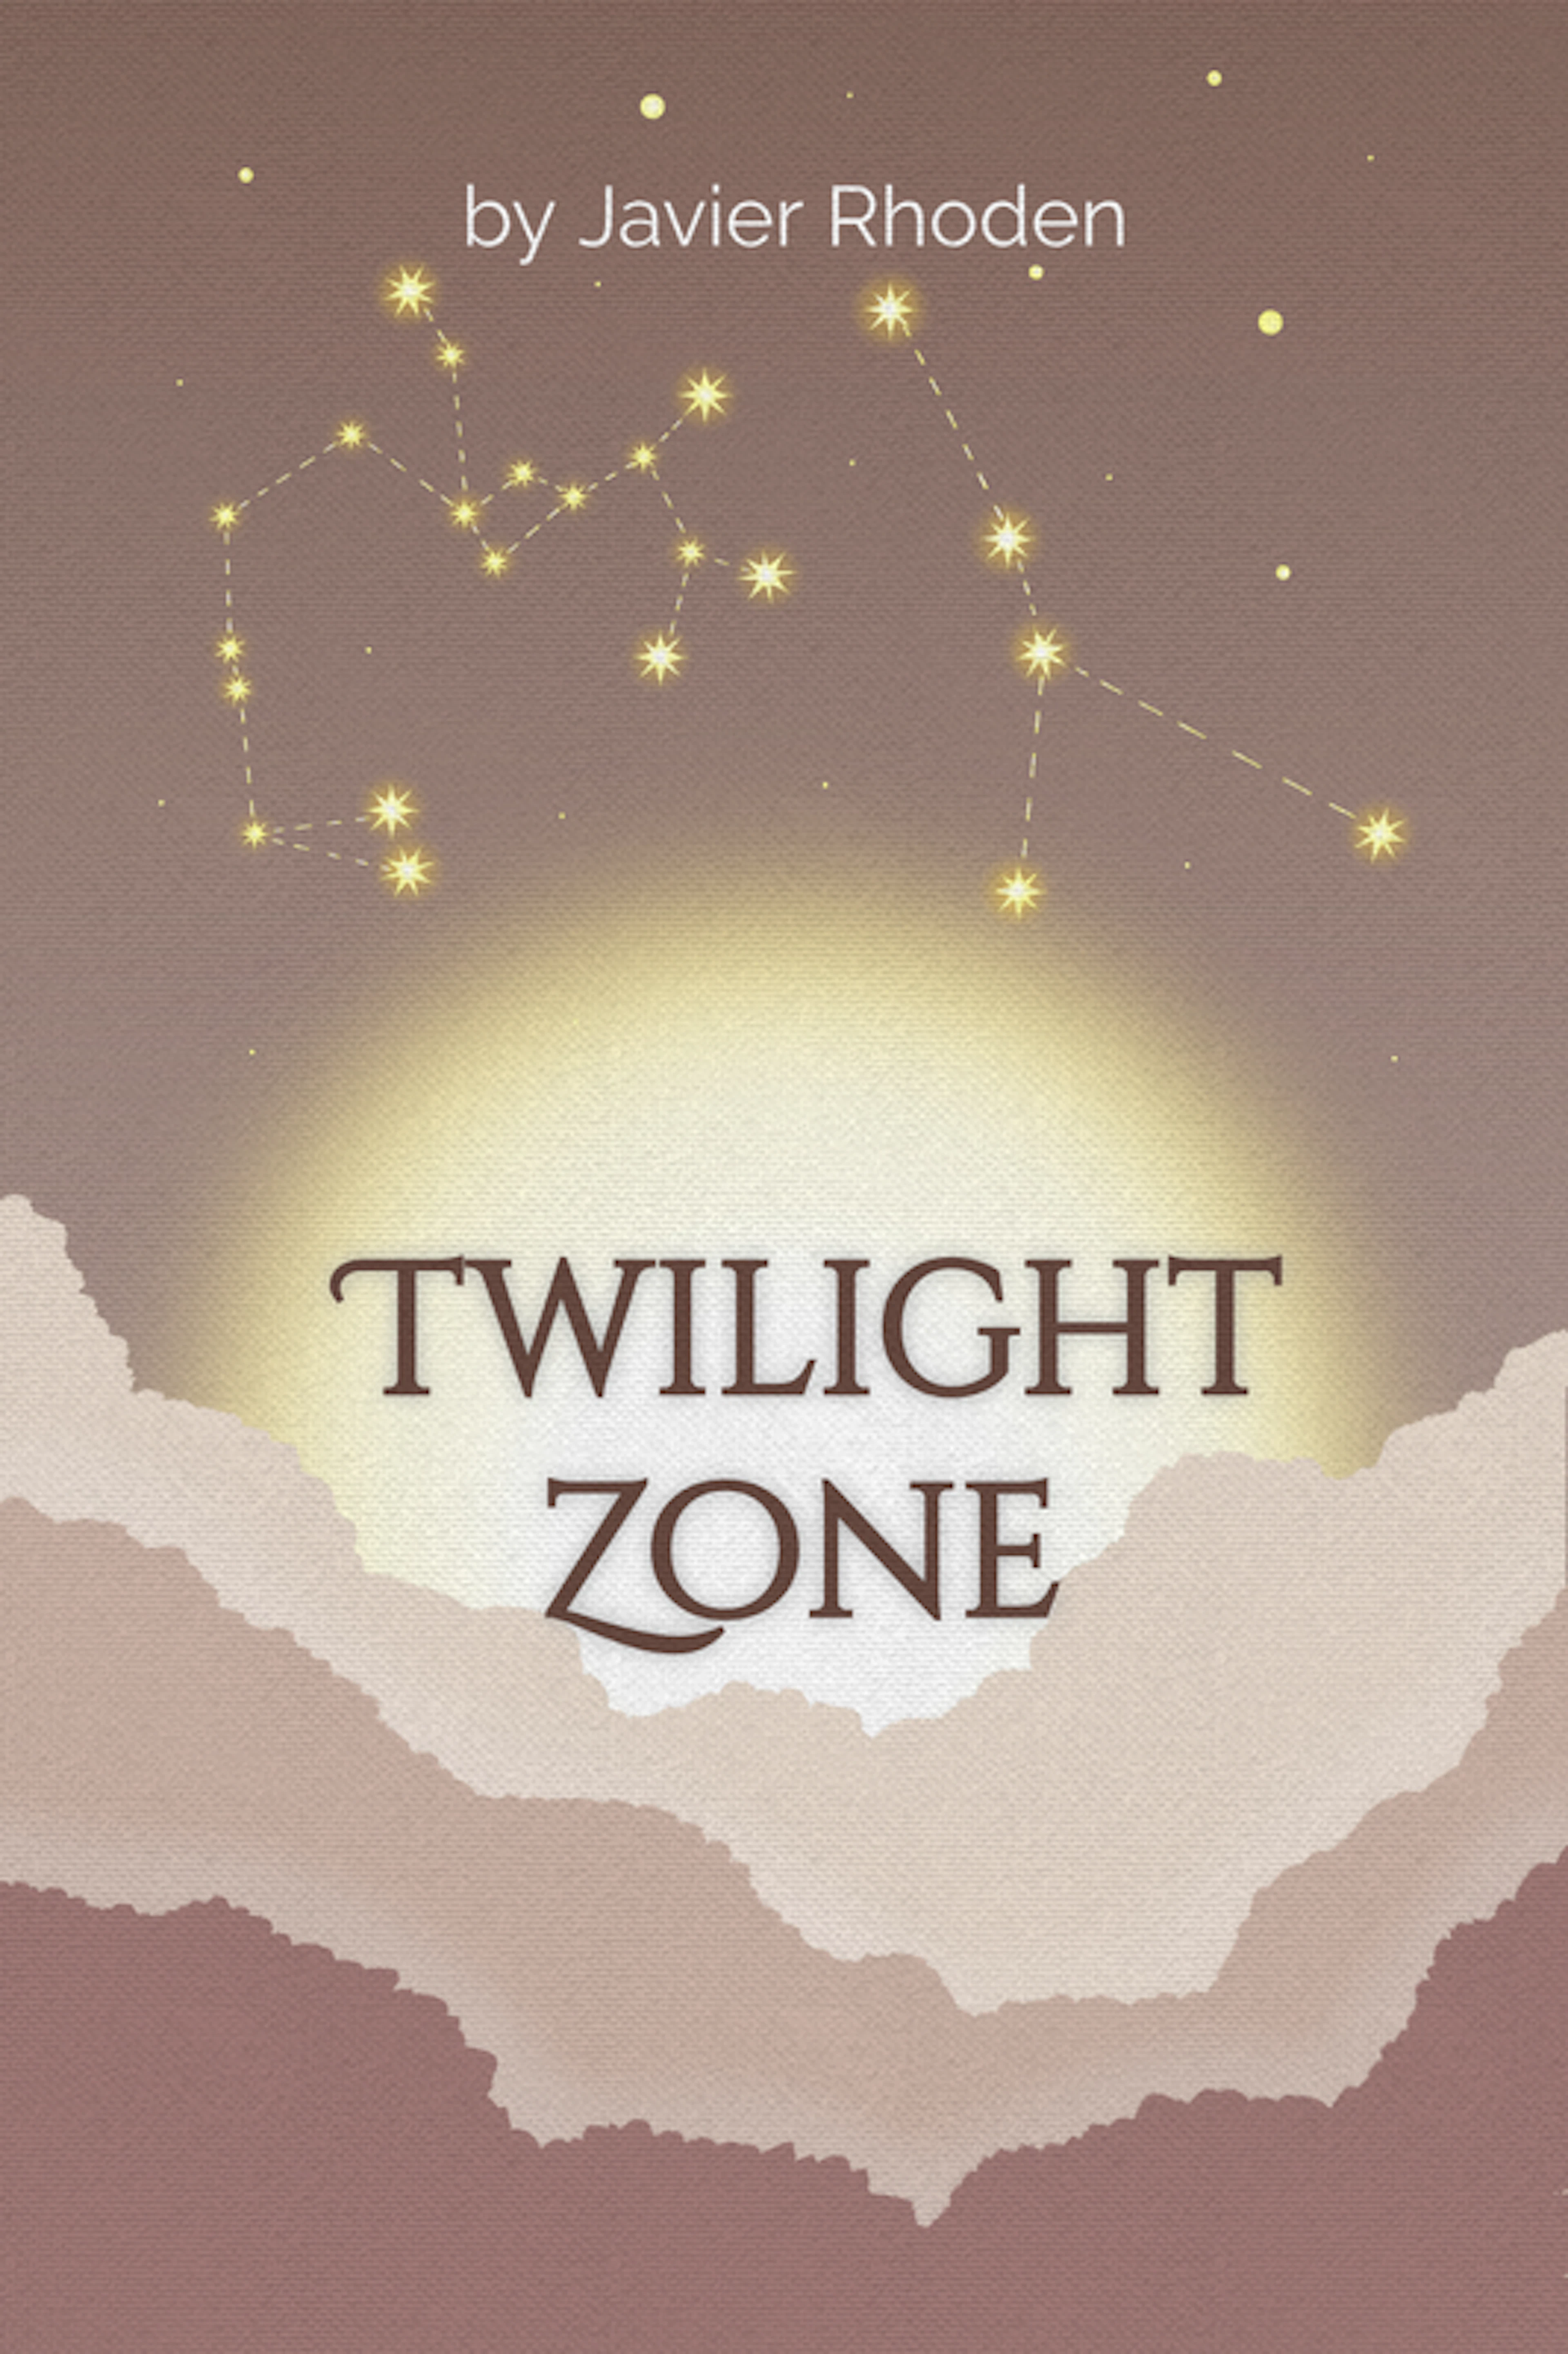 Twilight Zone by Javier Rhoden